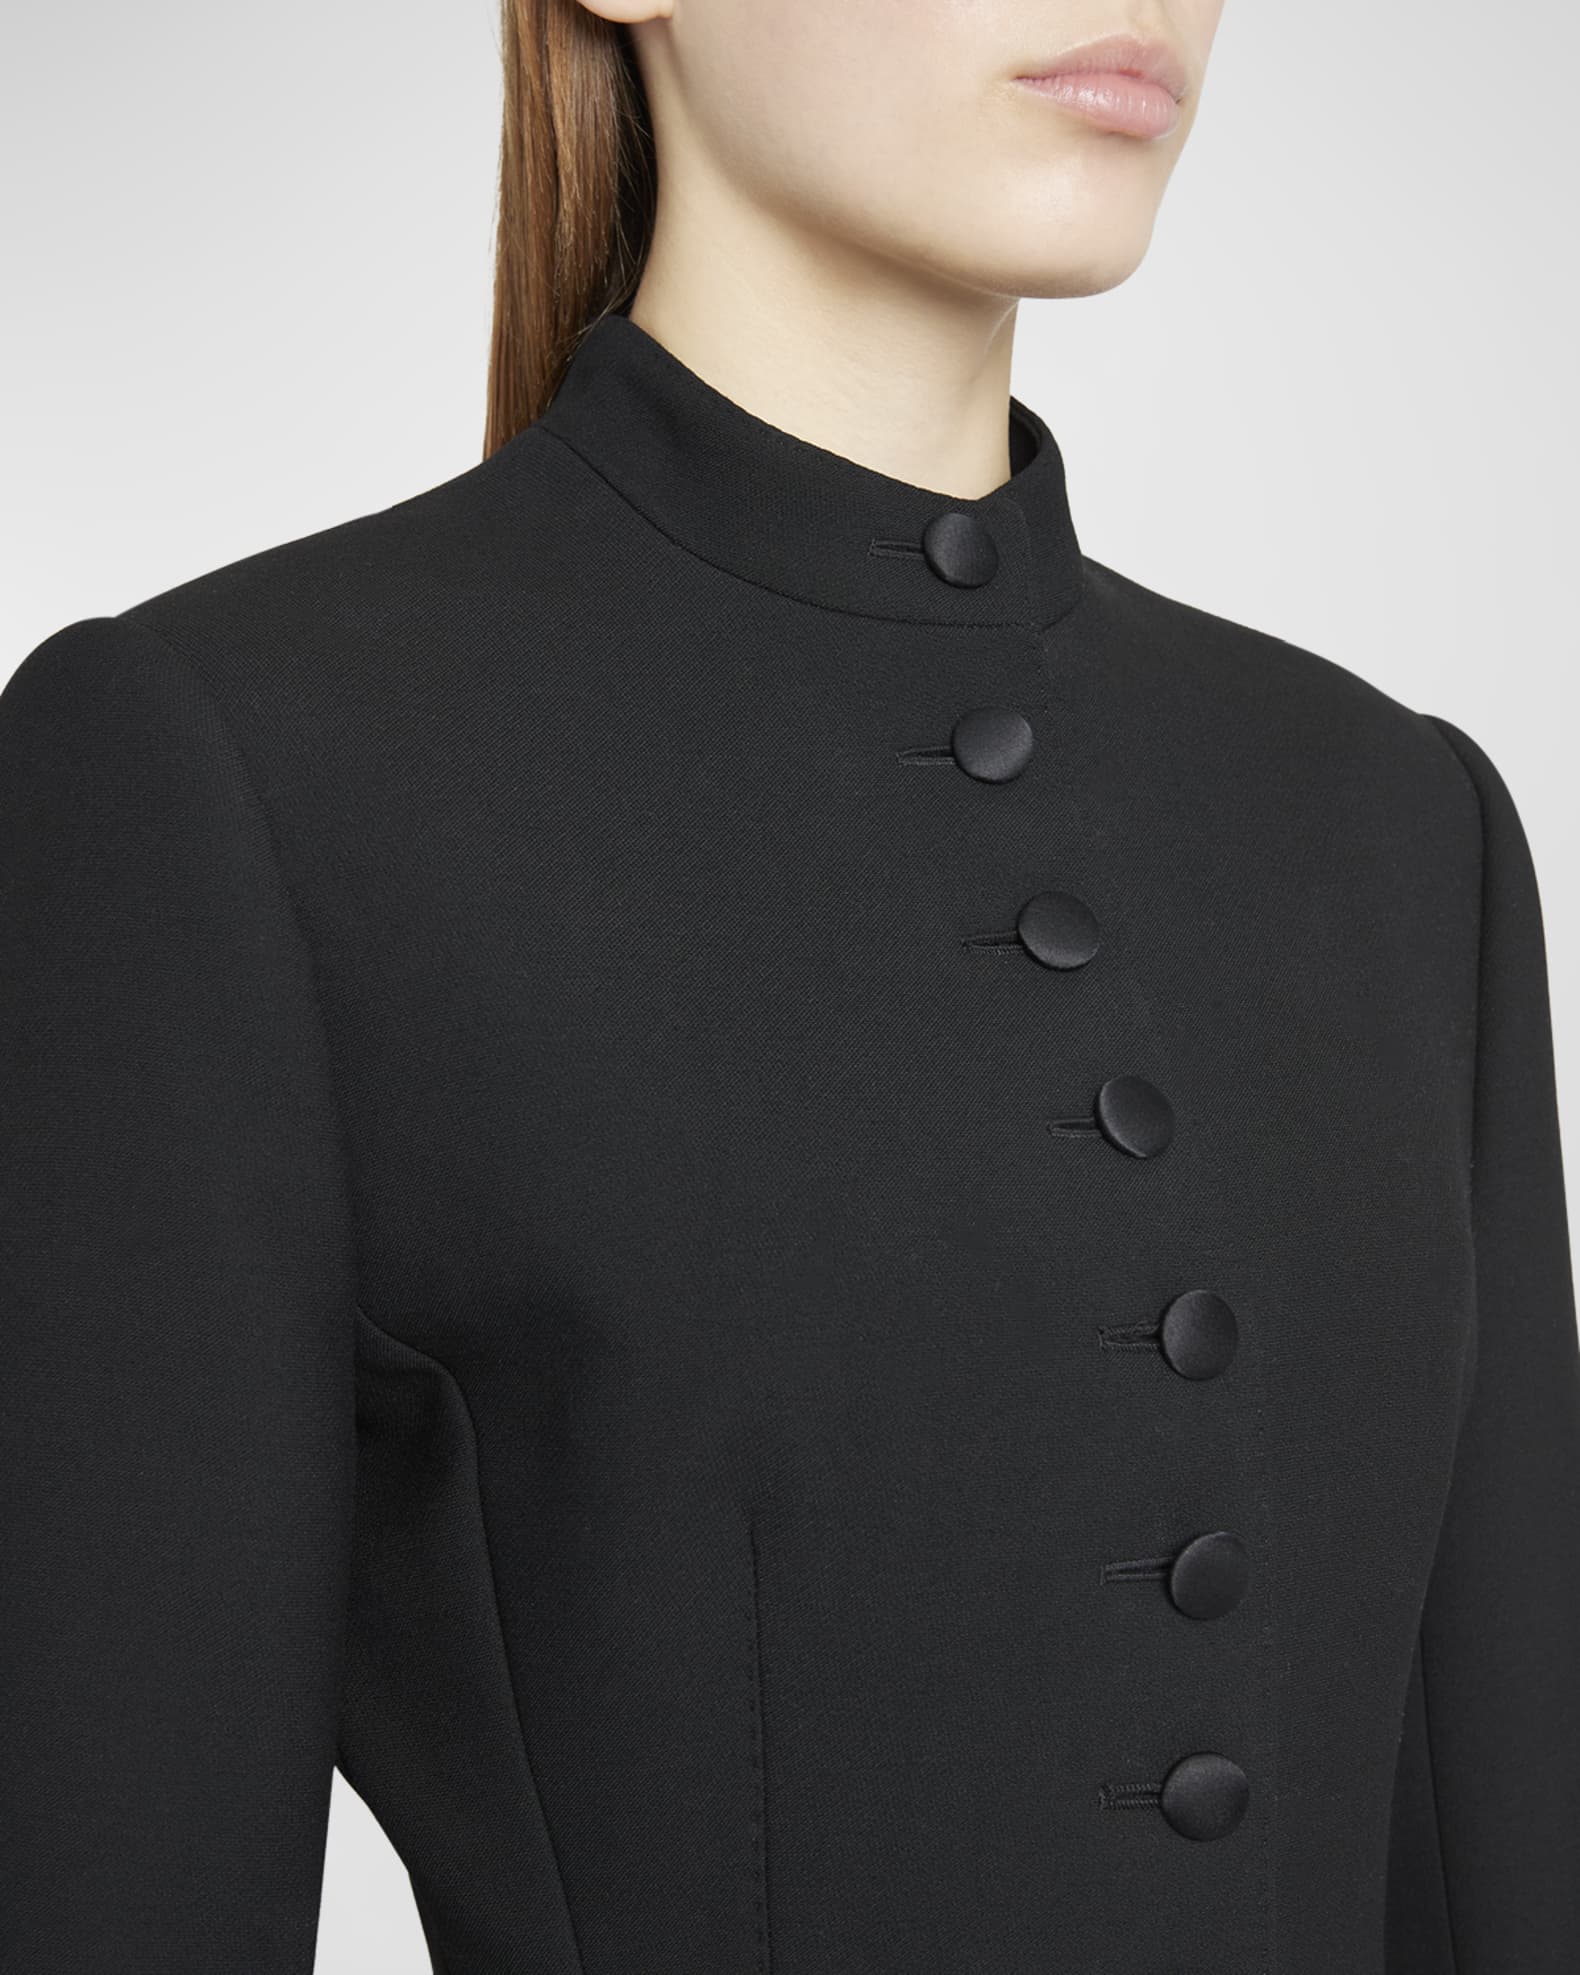 Dolce&Gabbana Peplum Wool Button-Front Top Coat | Neiman Marcus